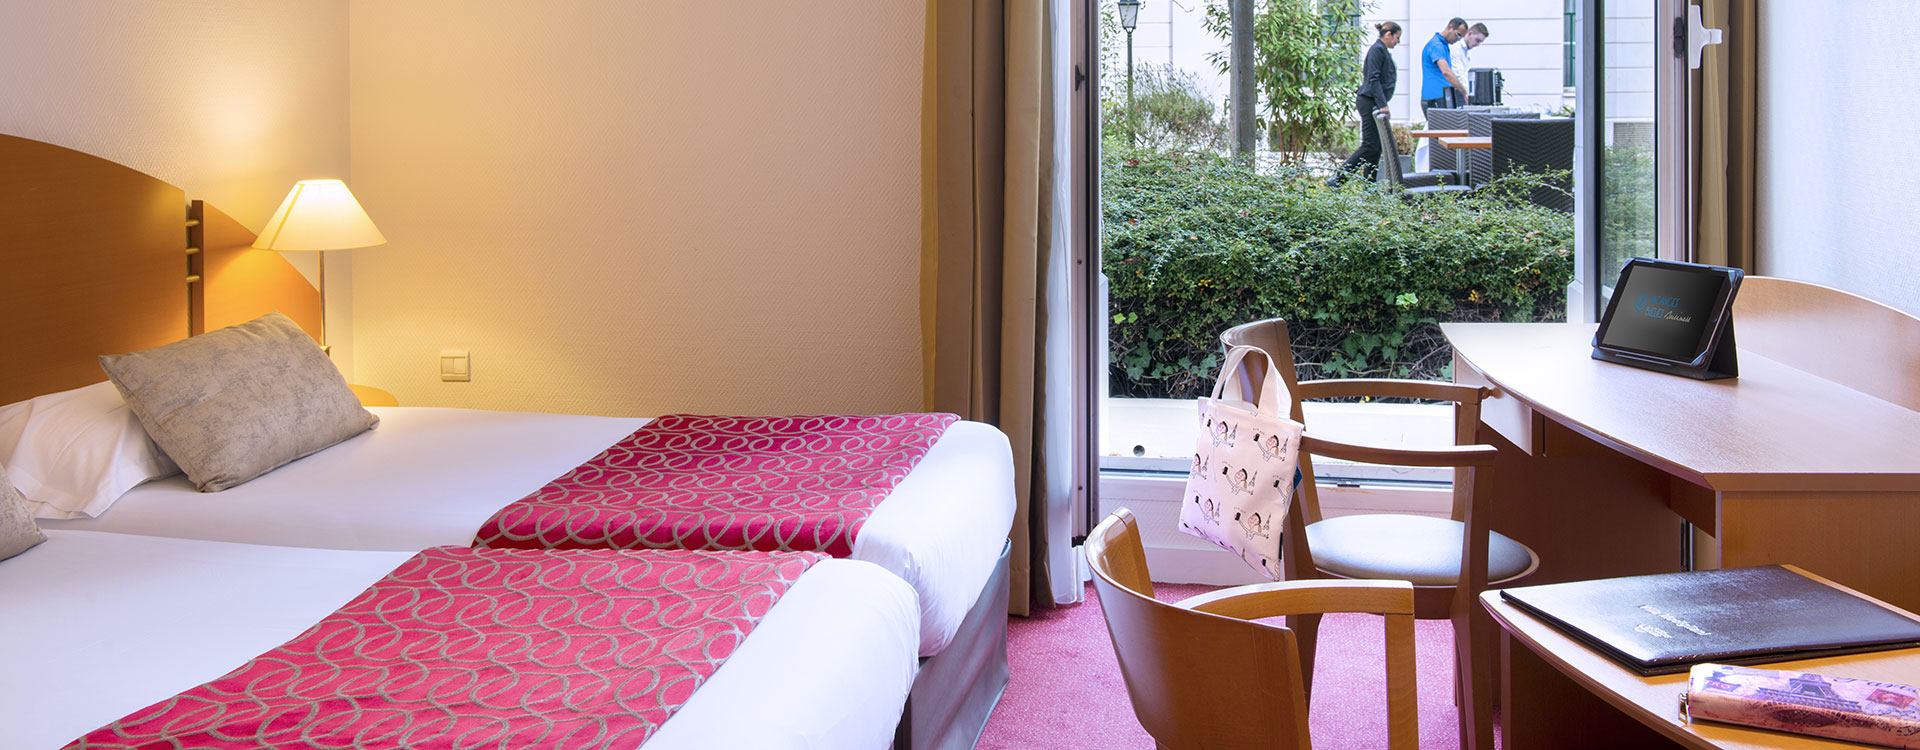 Chambre standard - Hôtel*** Paris La Villa Modigliani